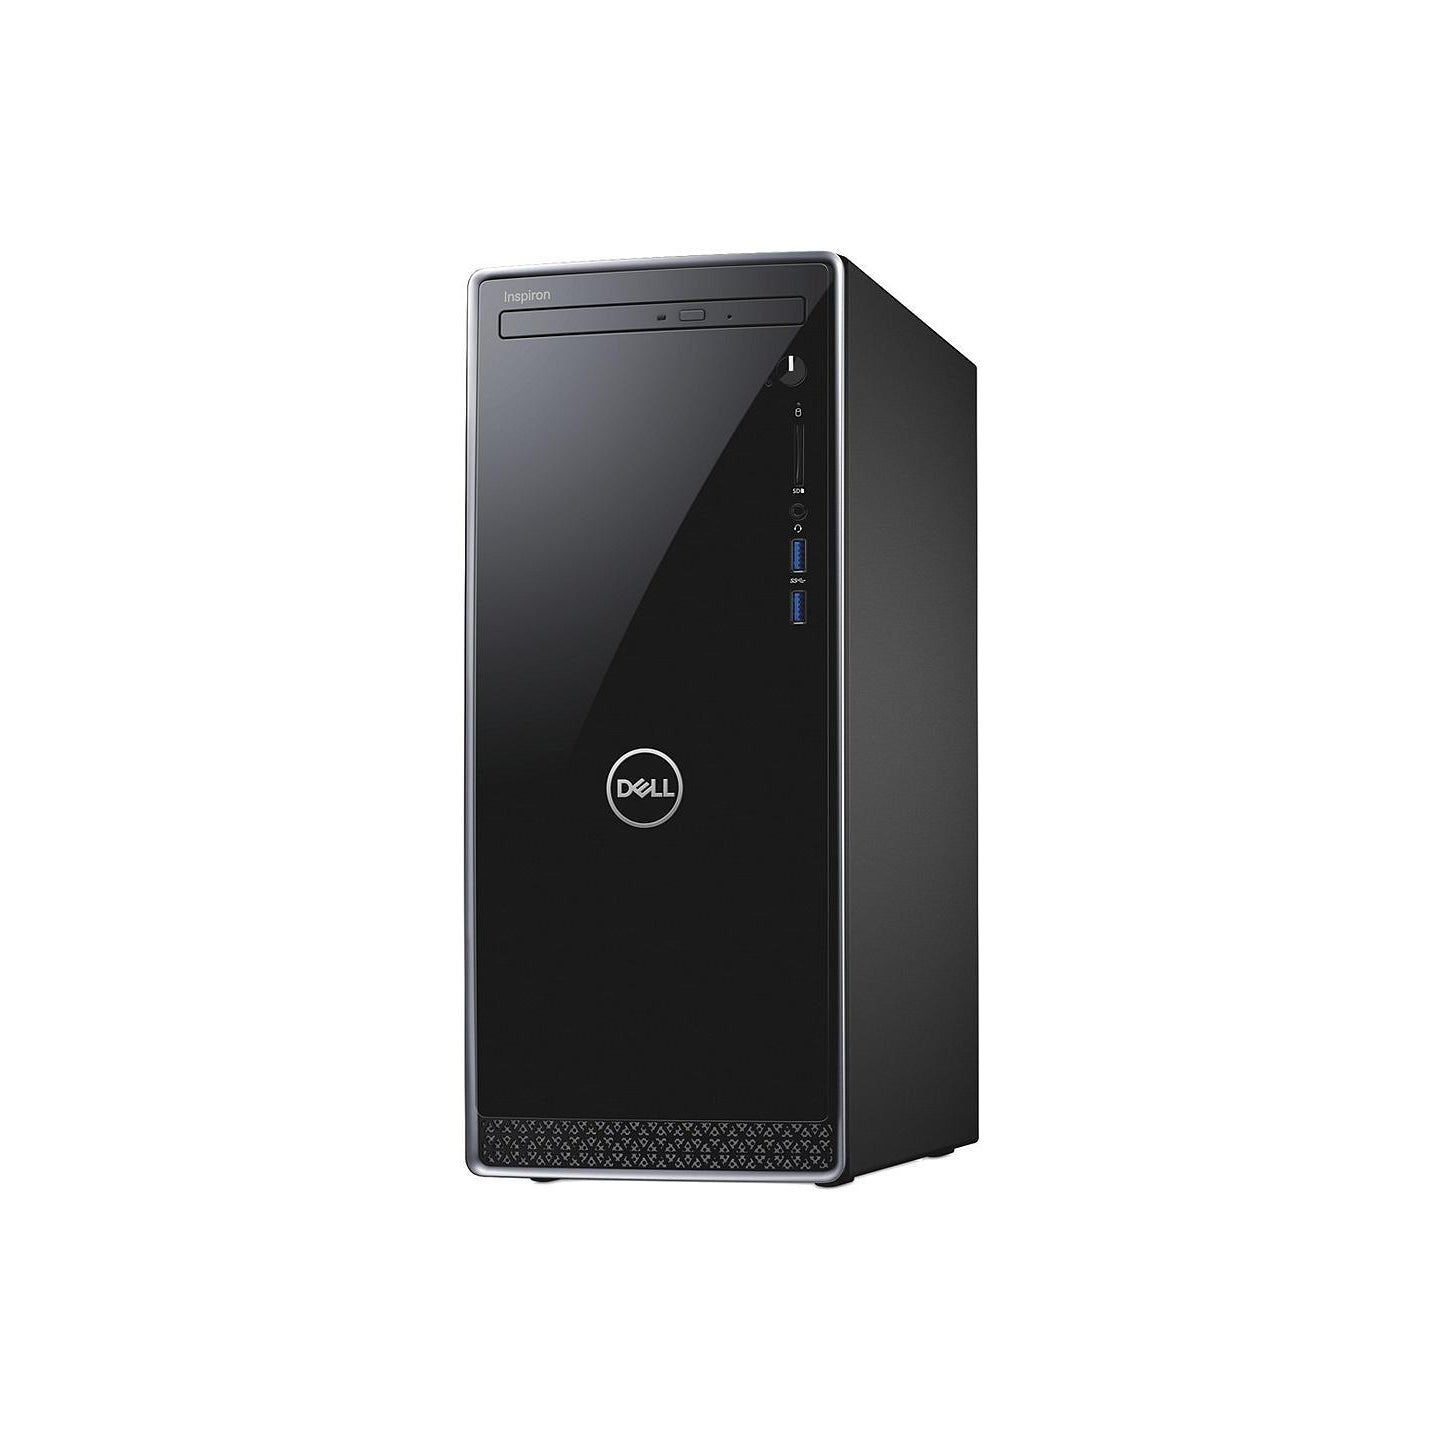 Dell Inspiron 3670 Desktop PC, Intel Core i5-8400 8GB RAM 1TB HDD - Black